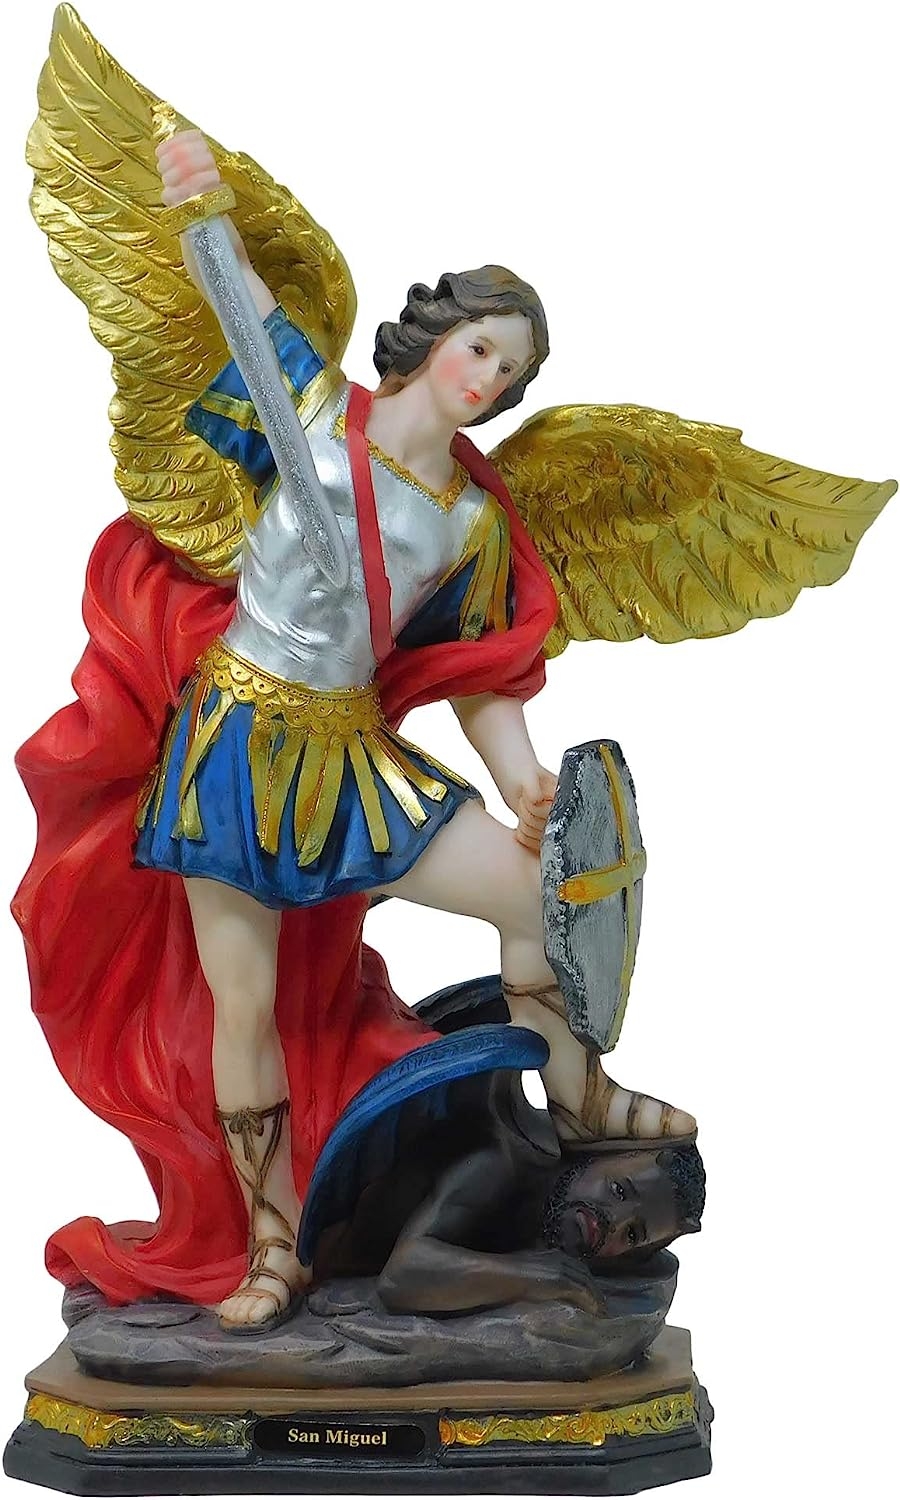 Arcángel San Miguel figura religiosa de 12 pulgadas de alto, estatua de Arcángel San Miguel   price checker   price checker